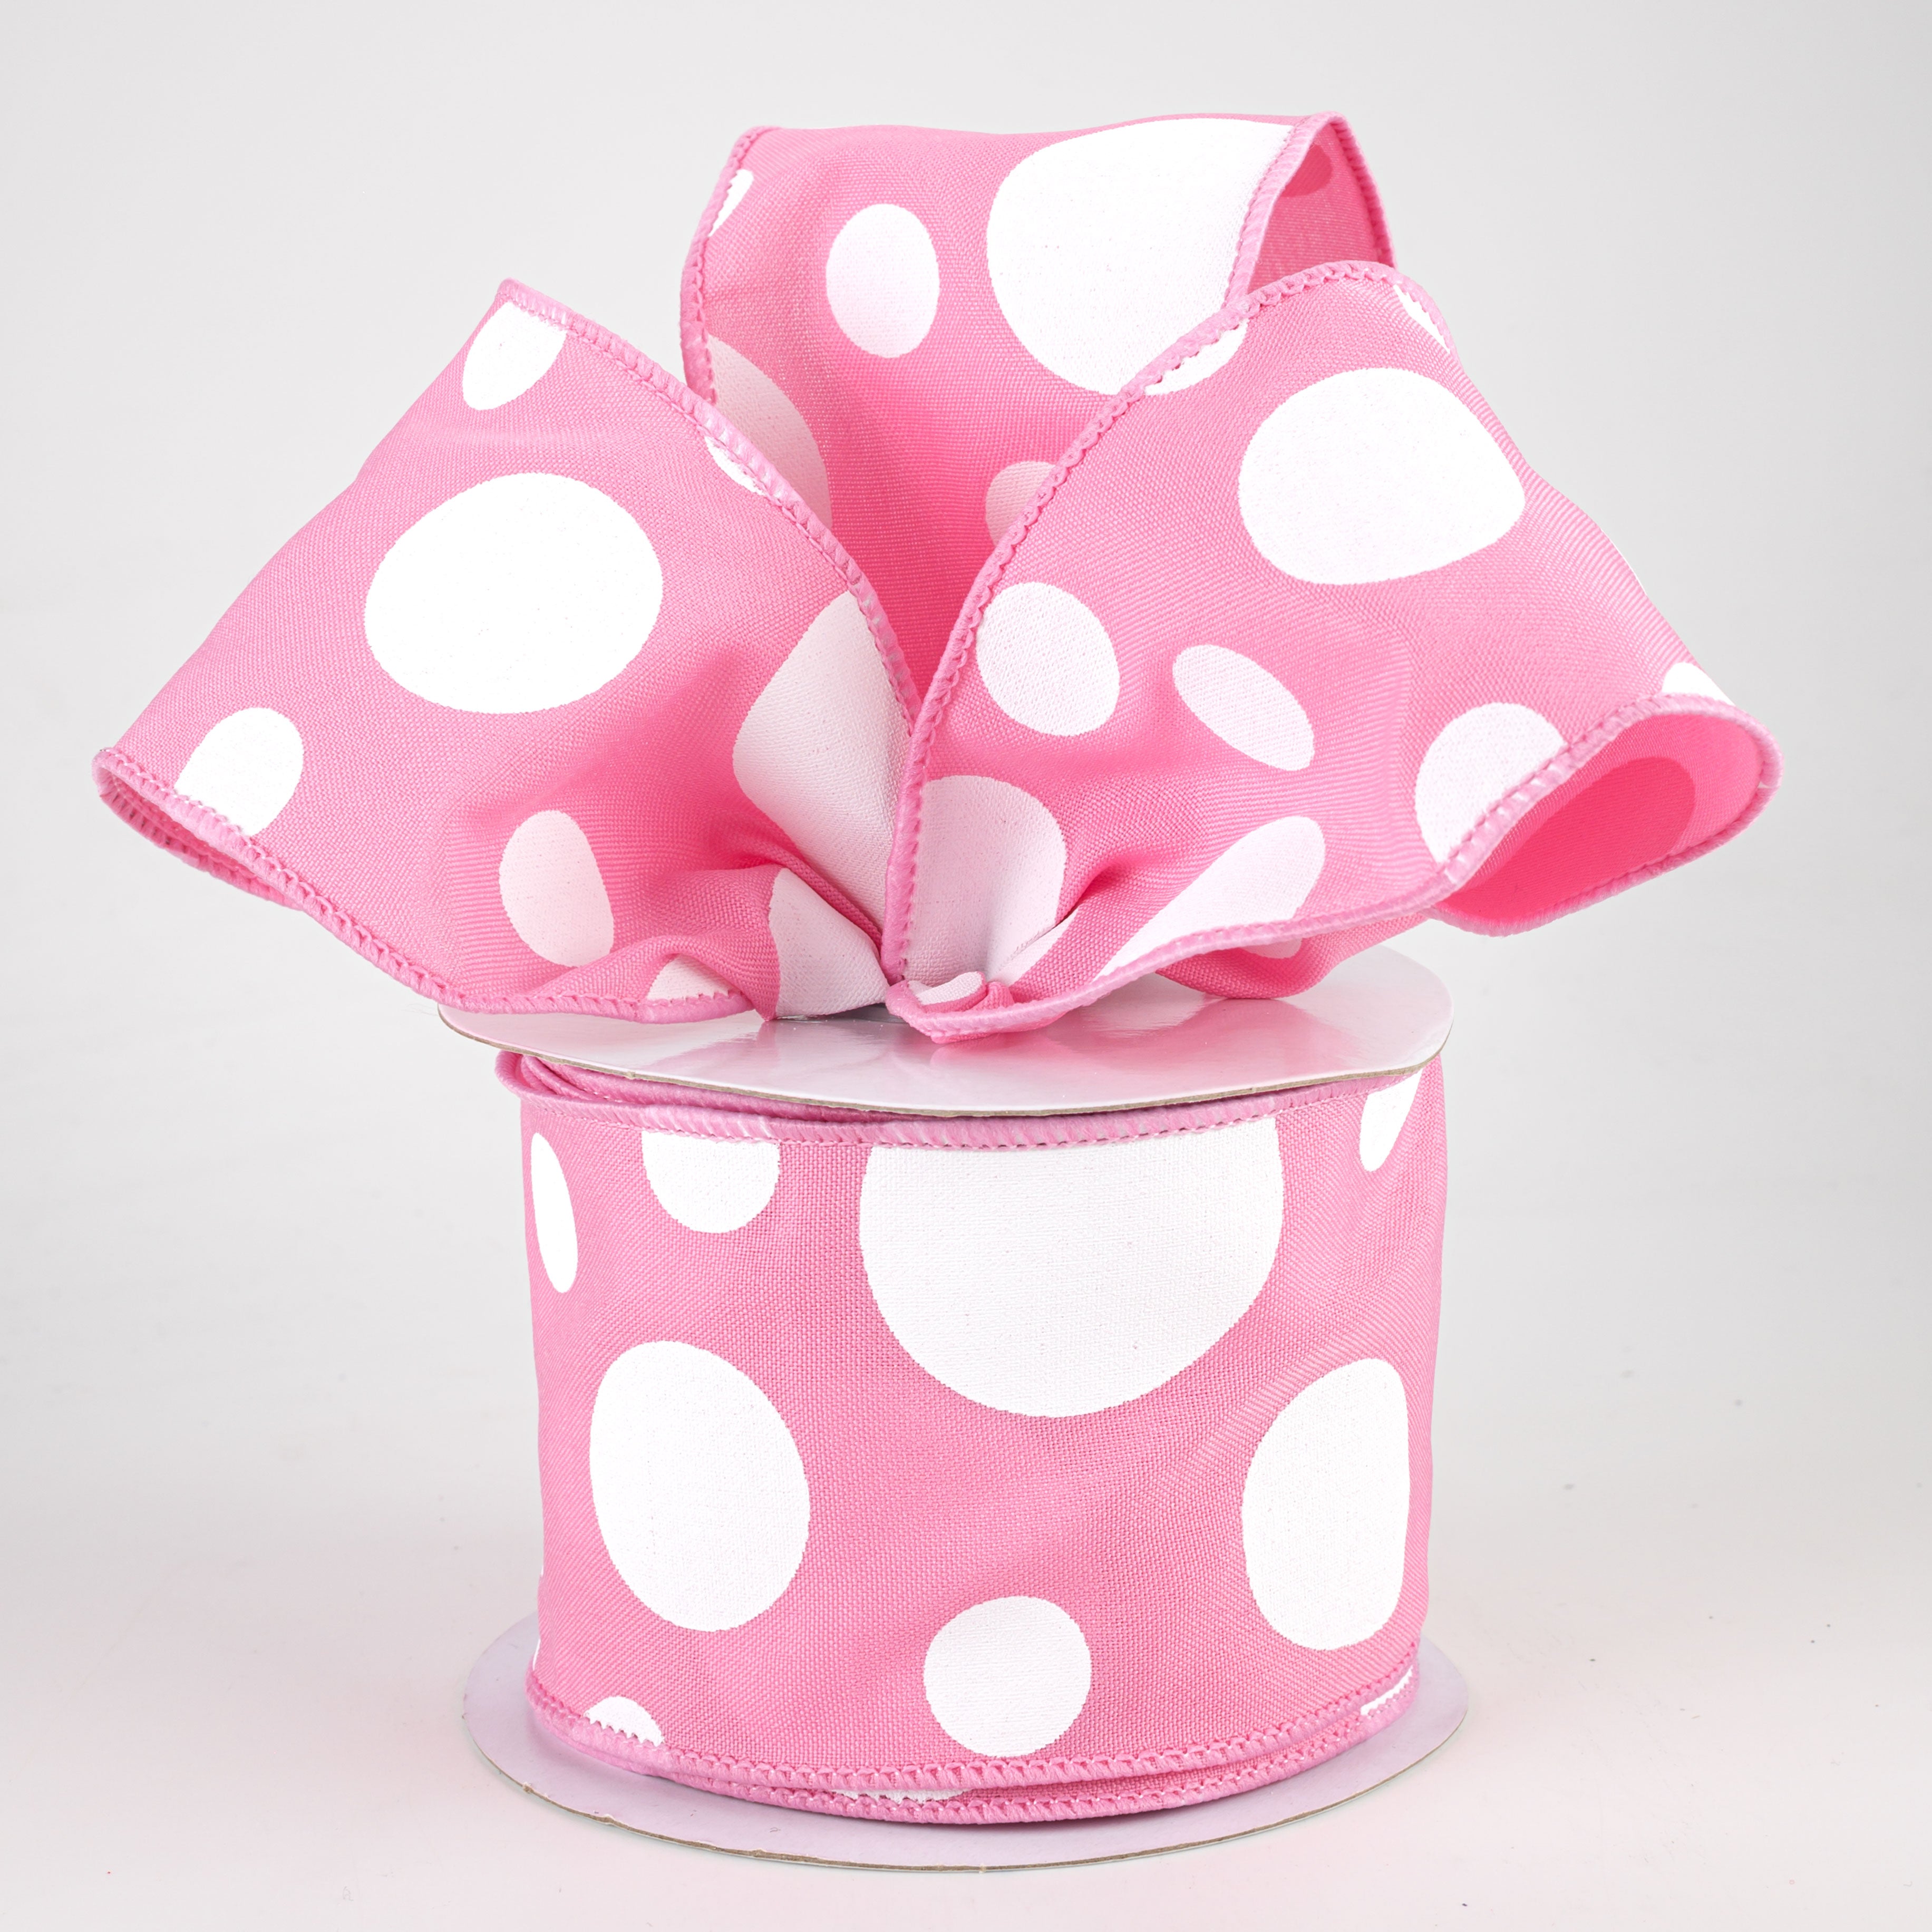 2.5" Giant Three Size Polka Dot Ribbon: Pink & White (10 Yards)